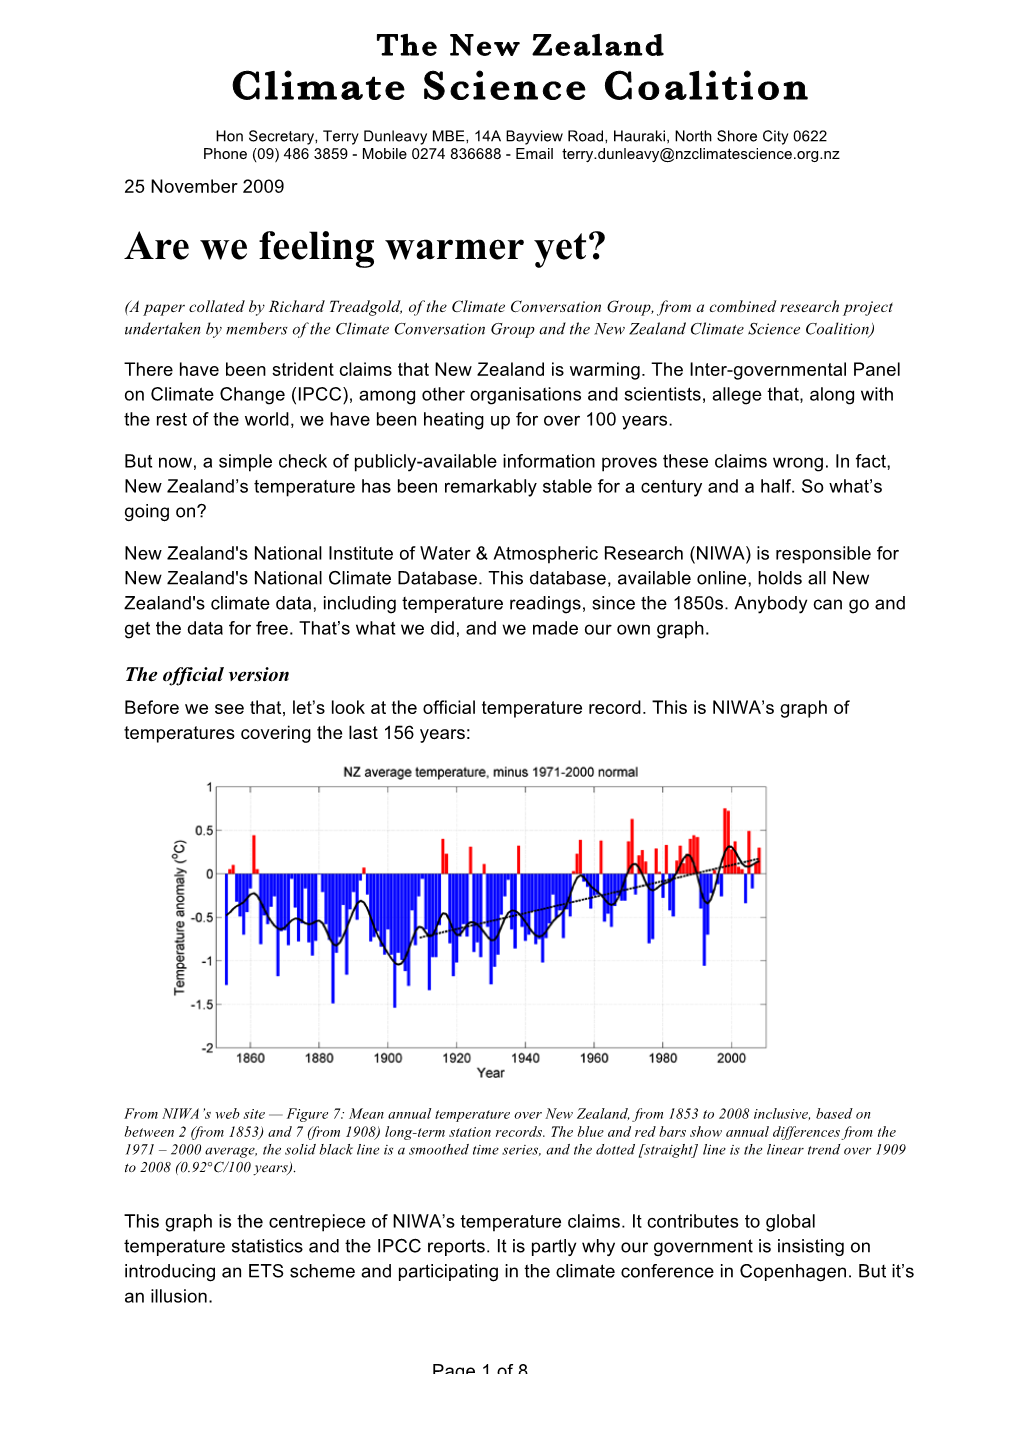 Global Warming in NZ 08